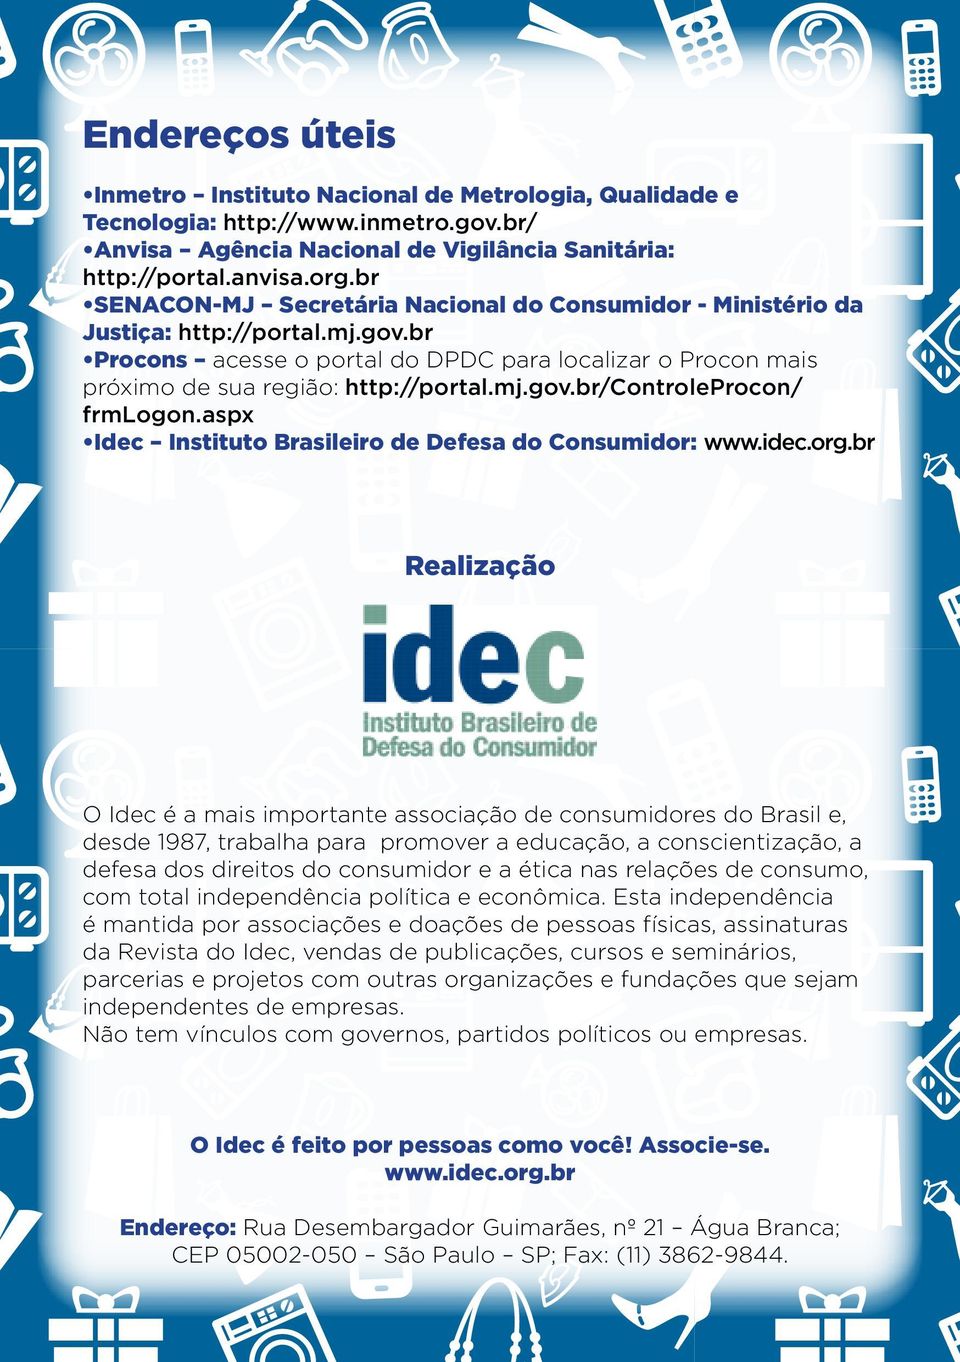 aspx Idec Instituto Brasileiro de Defesa do Consumidor: www.idec.org.